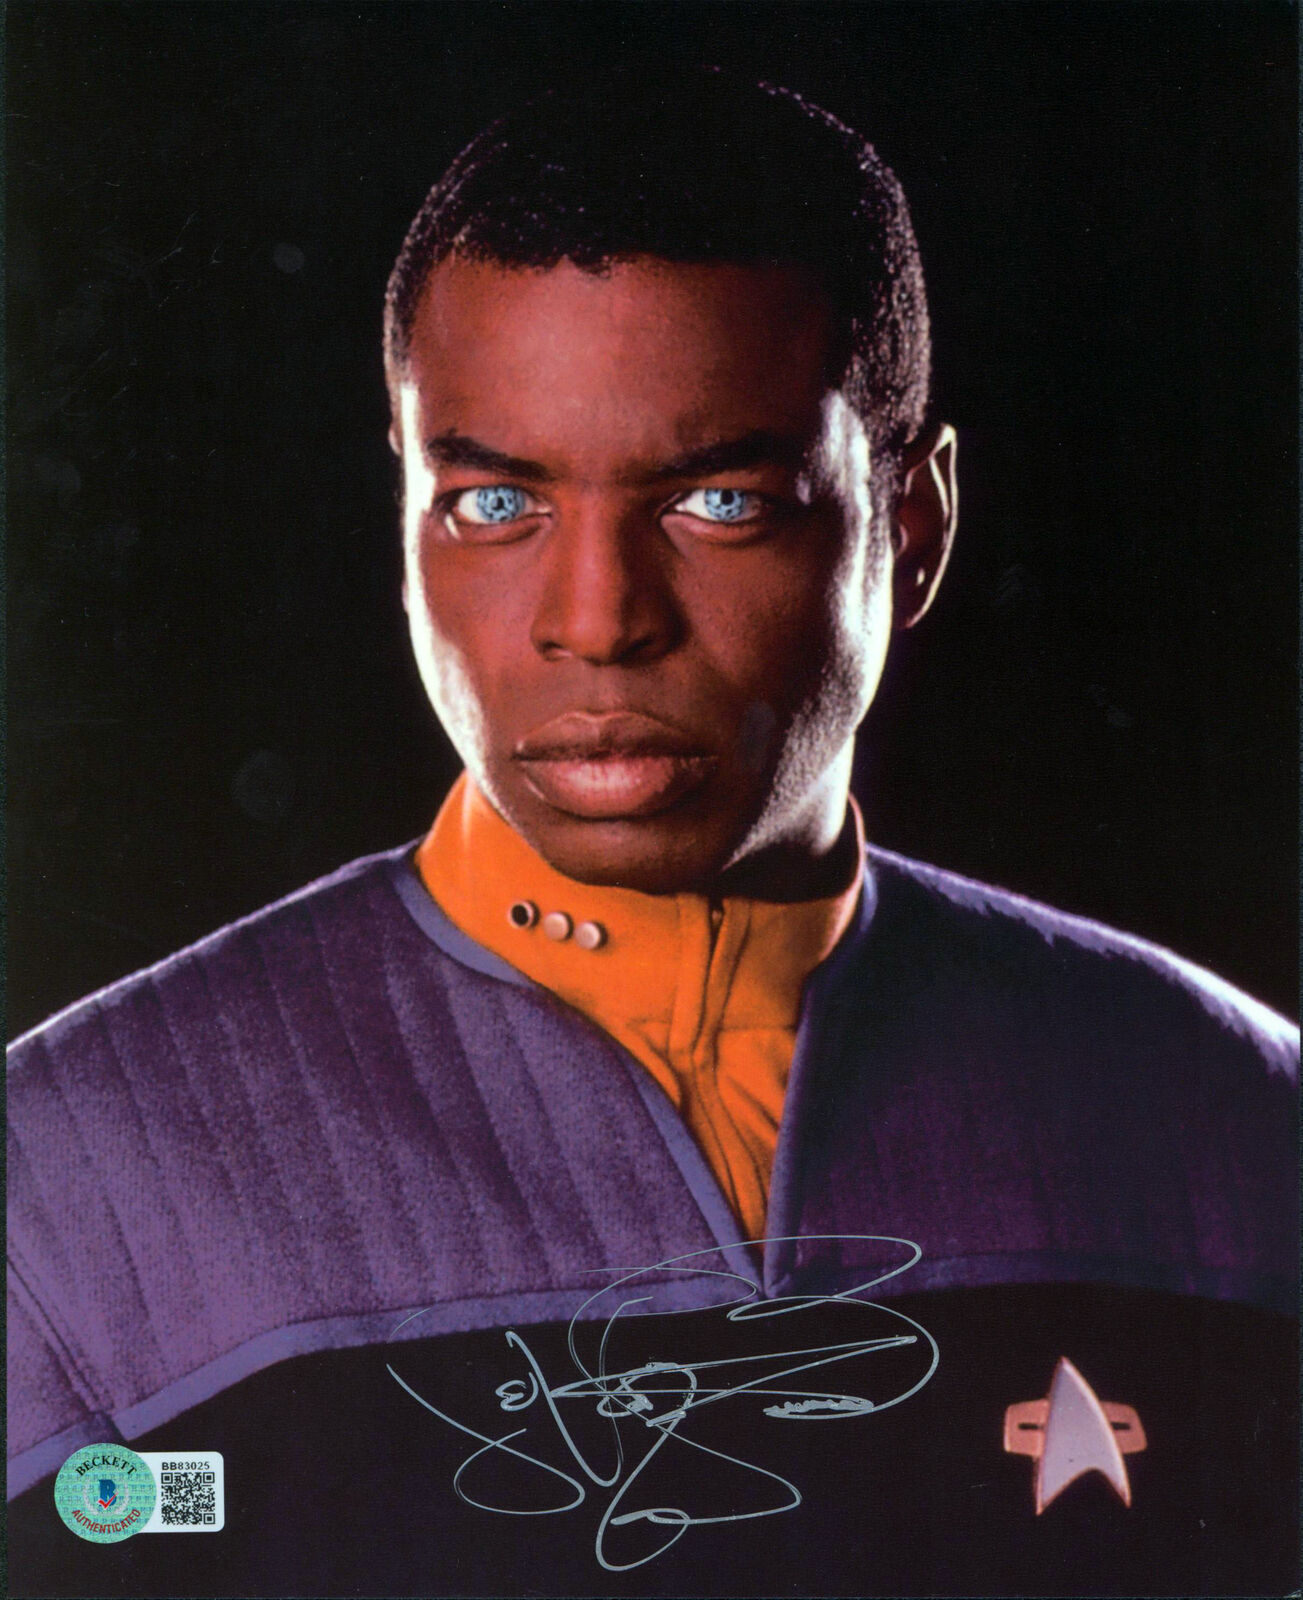 LeVar Burton Star Trek First Contact Signed 8x10 Postcard Photo Poster painting BAS #BB83025